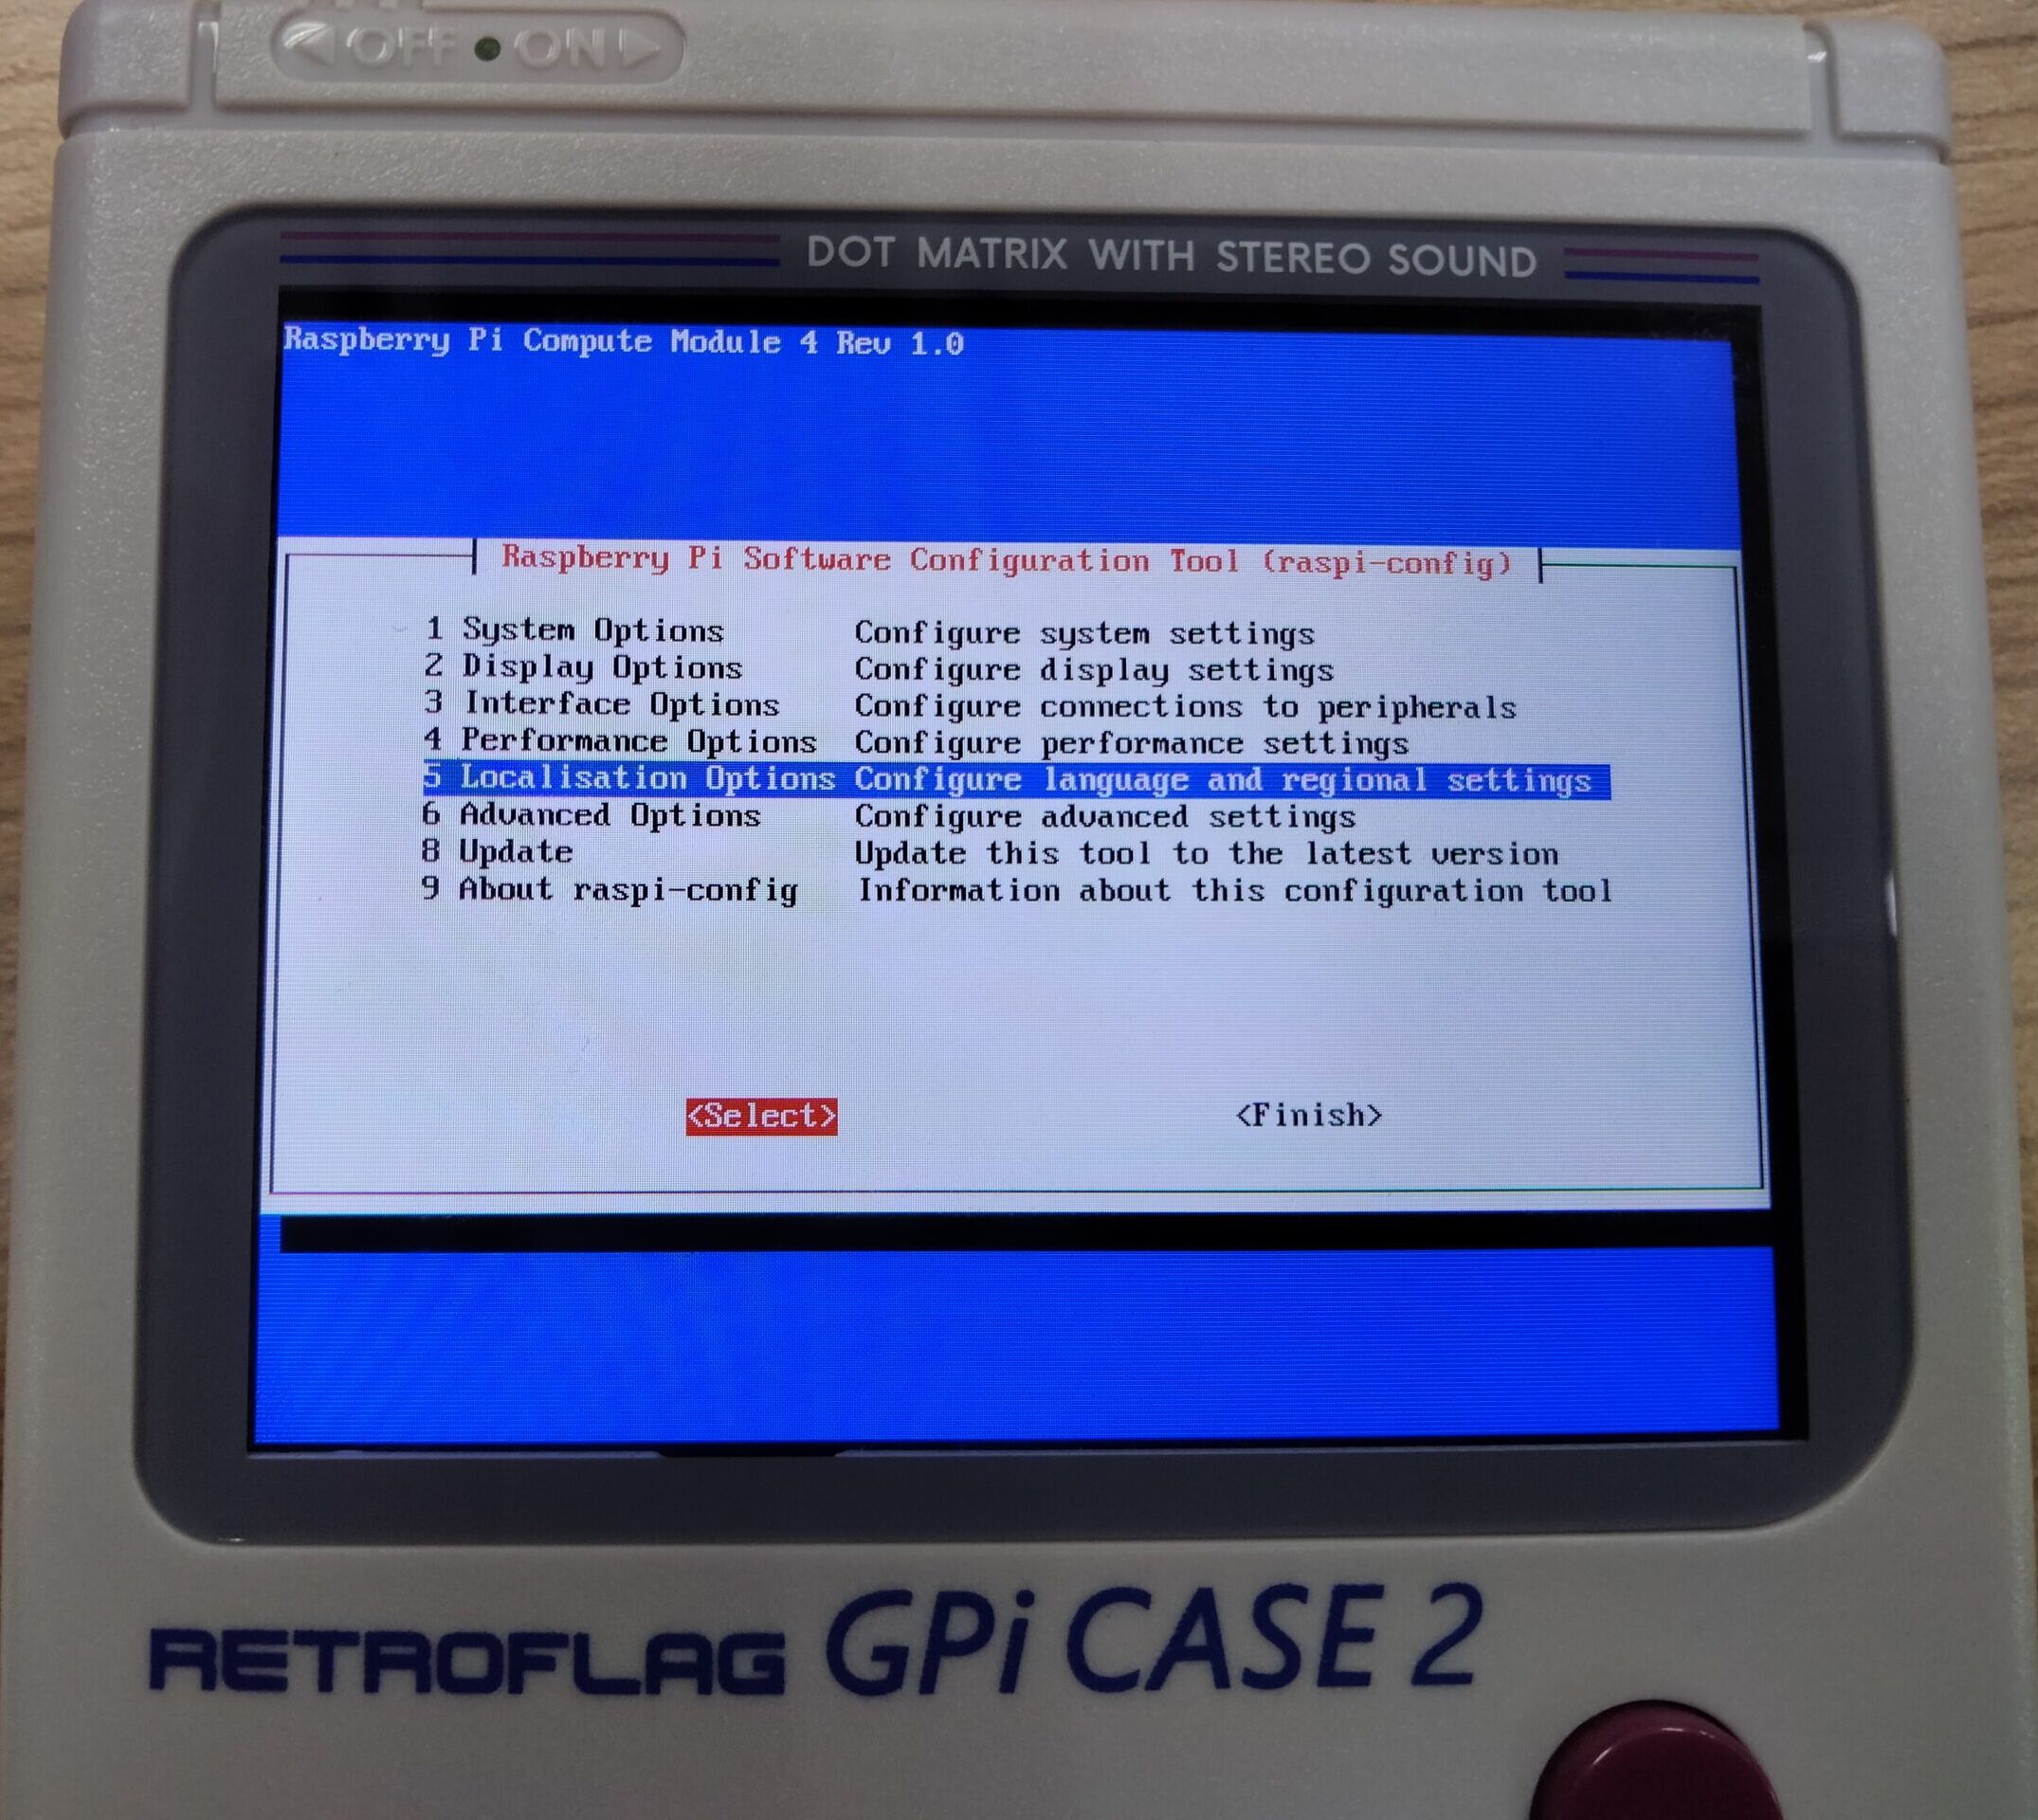 Installing RetroPie on CM4 eMMC with RetroFlag GPi CASE 2